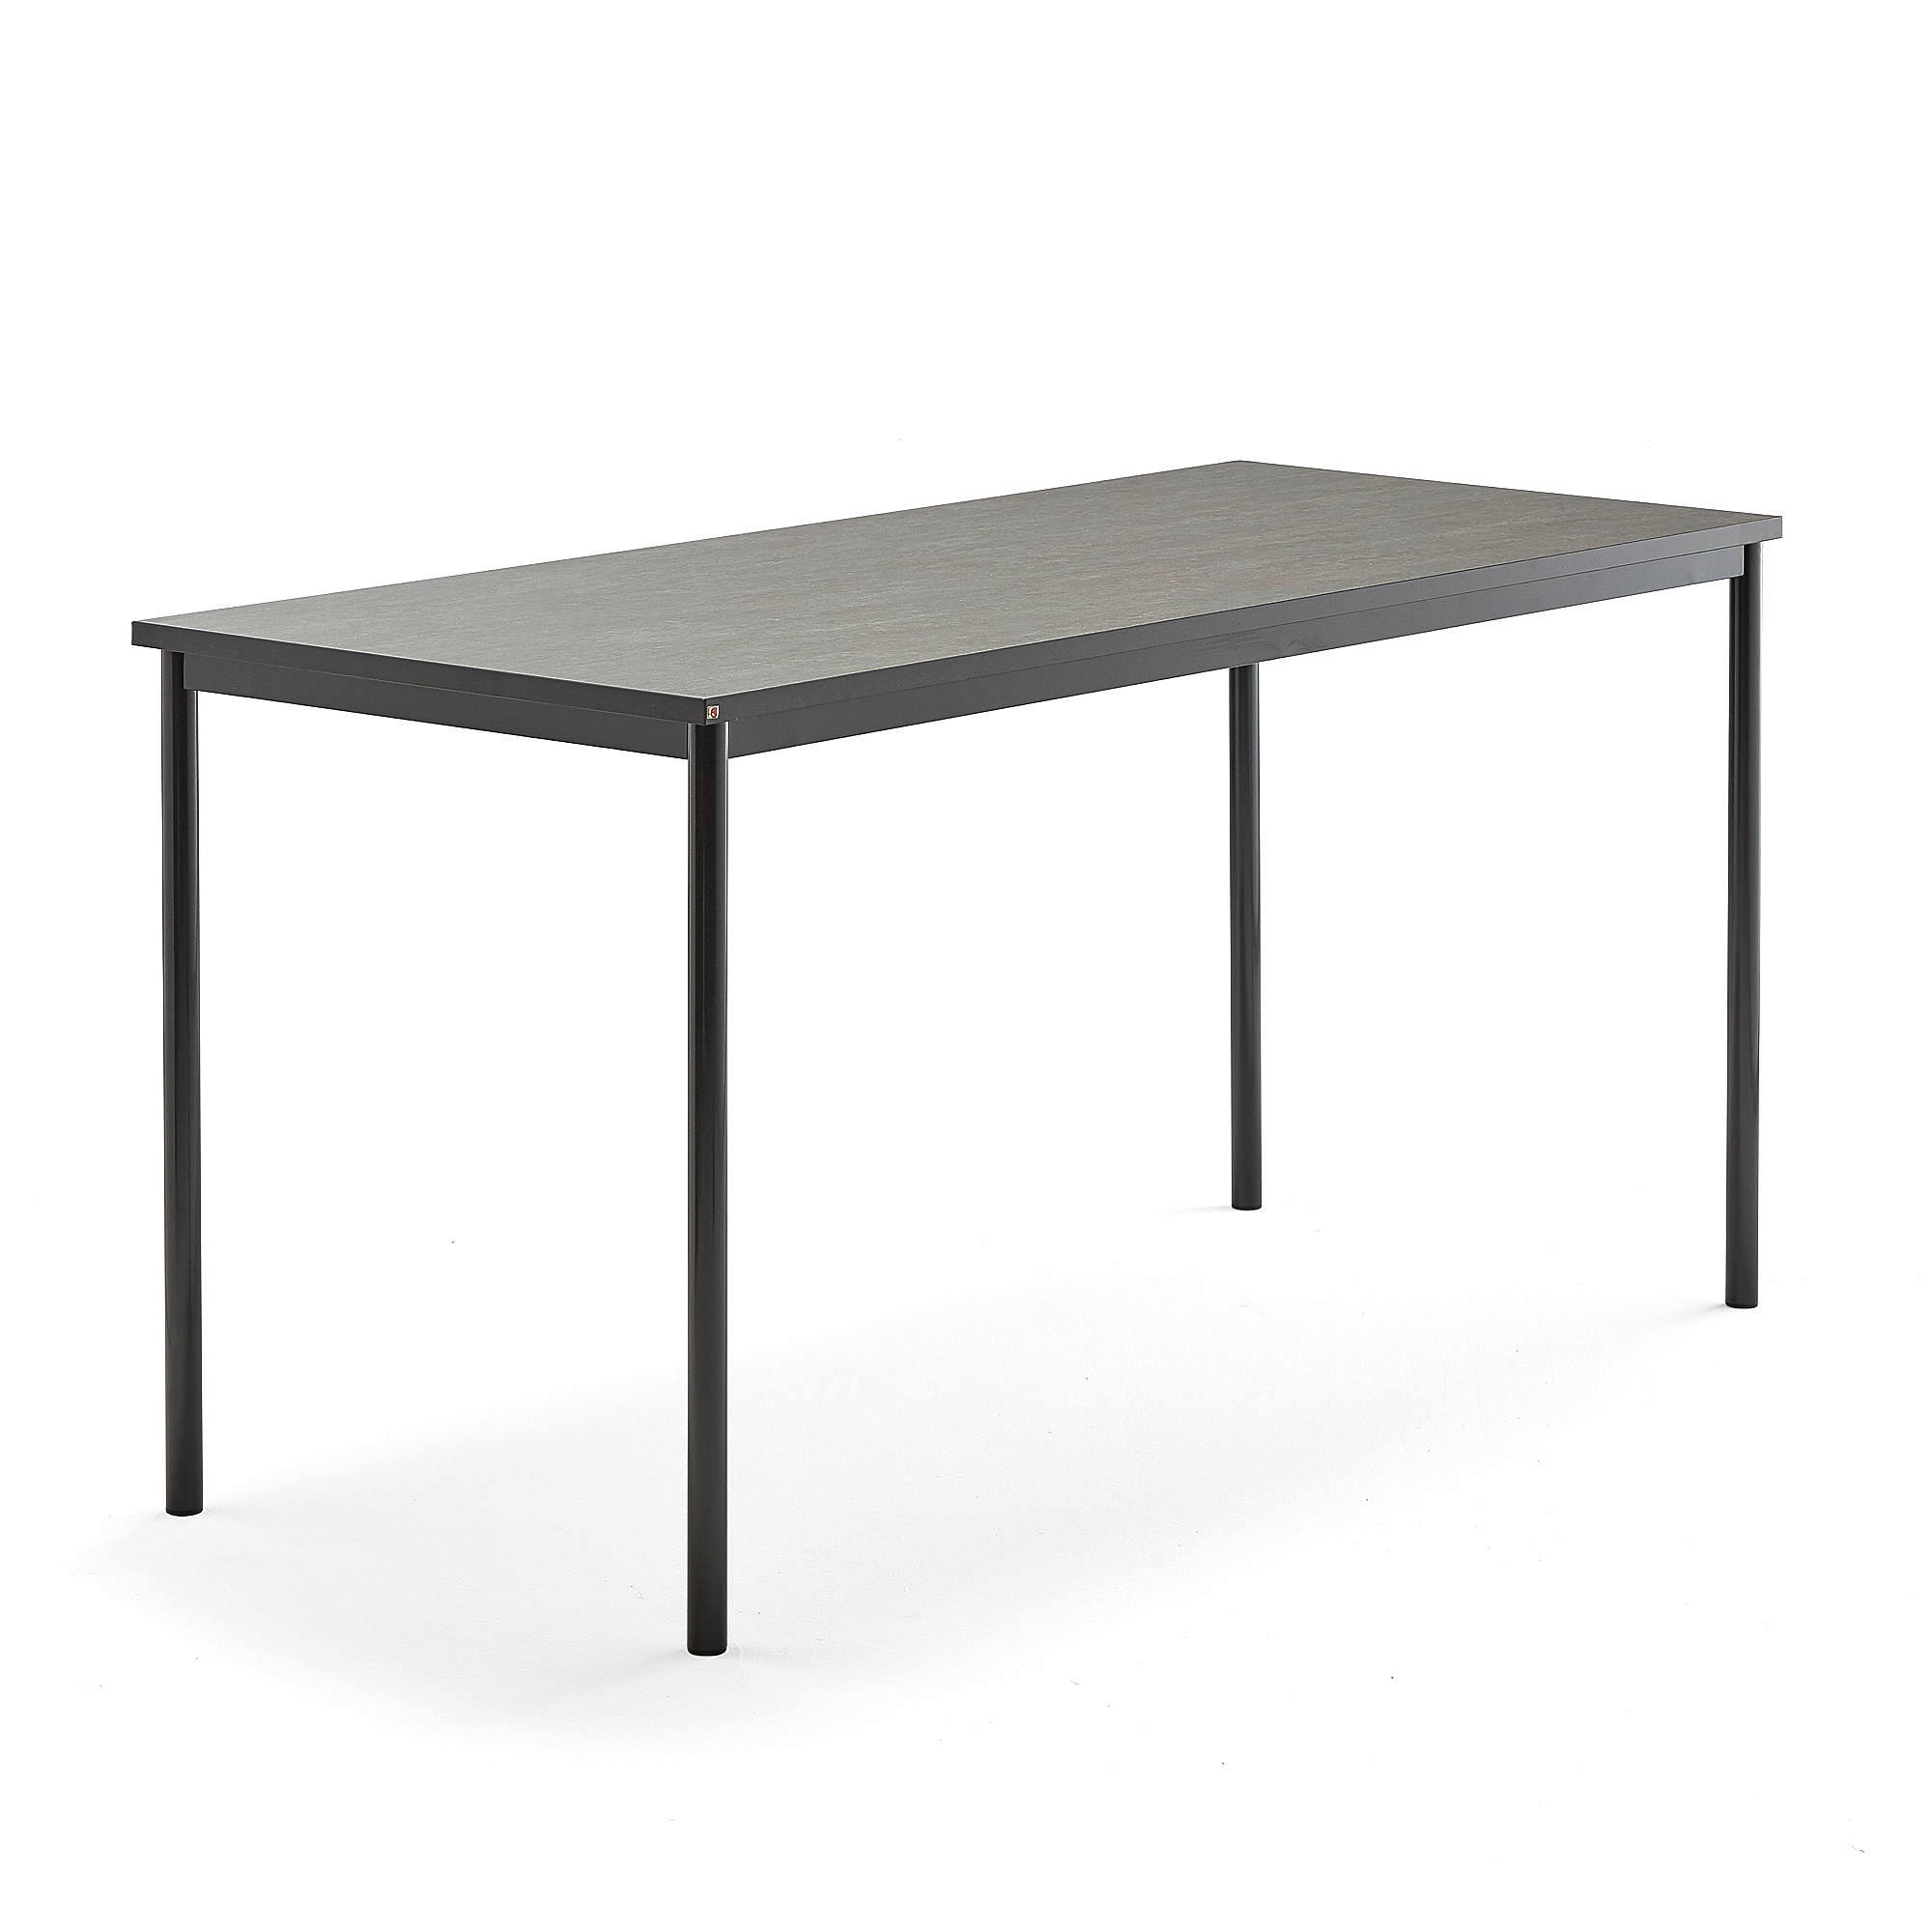 Stůl SONITUS, 1800x800x900 mm, antracitově šedé nohy, deska s linoleem, tmavě šedá